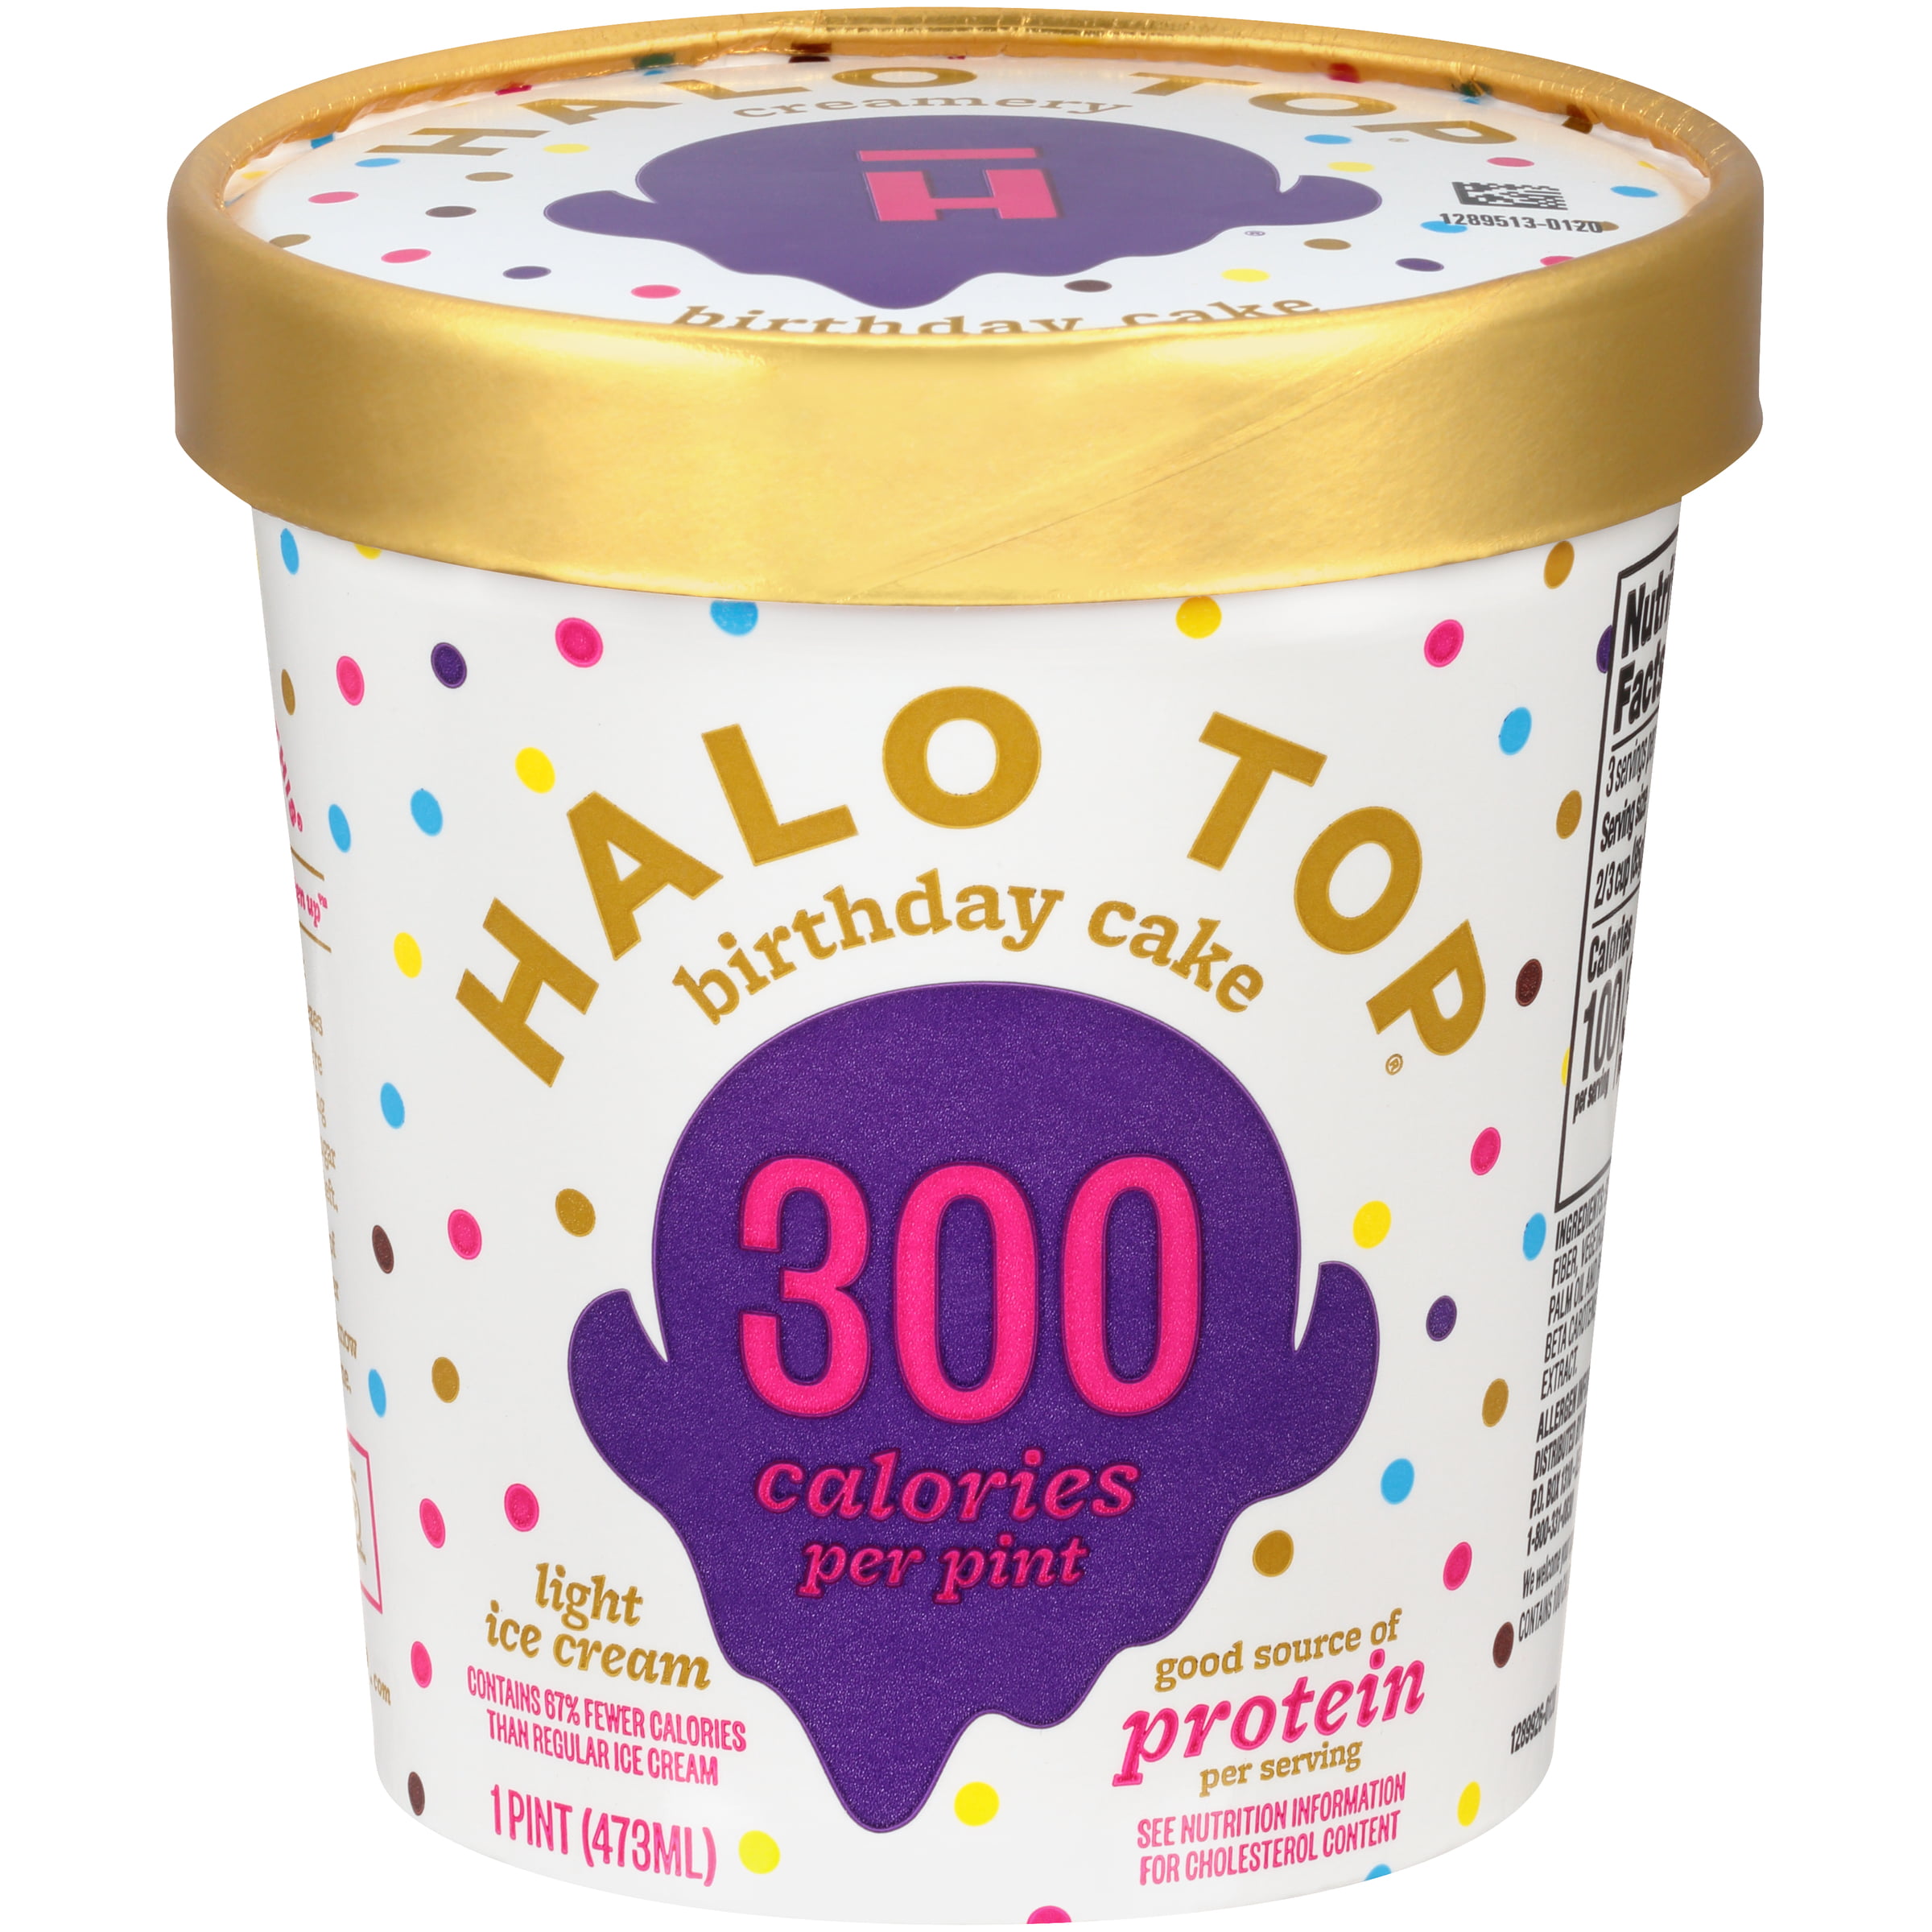 Halo Top Birthday Cake Light Ice Cream Pint , 16 fl oz